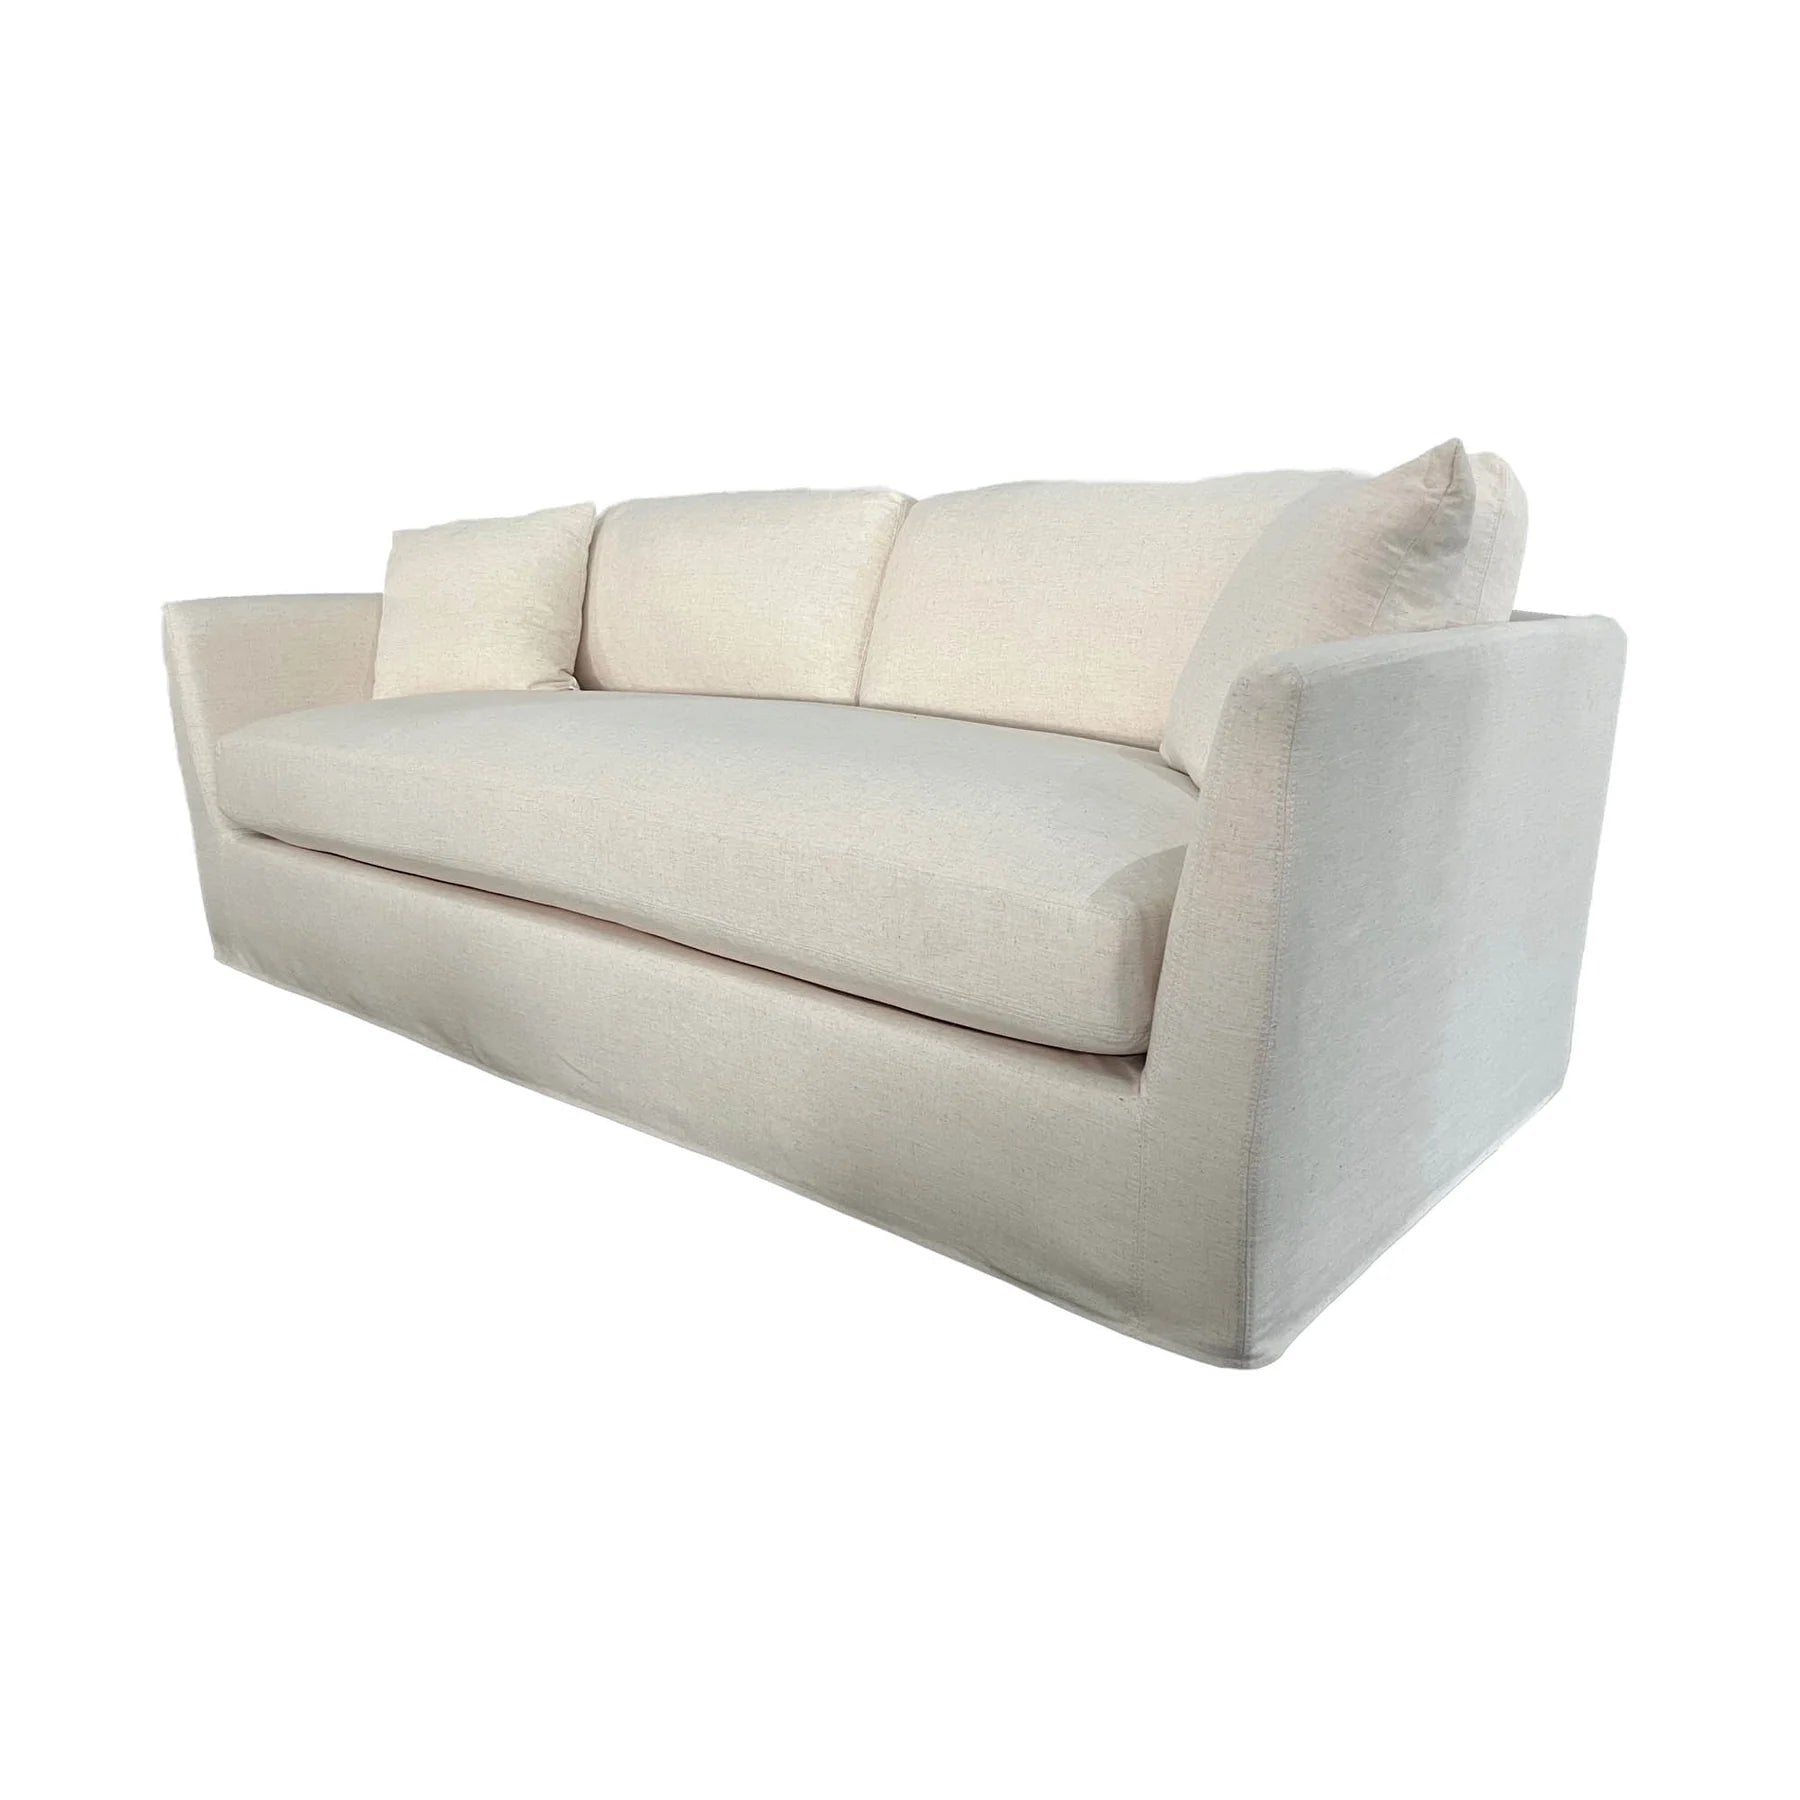 Picture of Heston Sofa